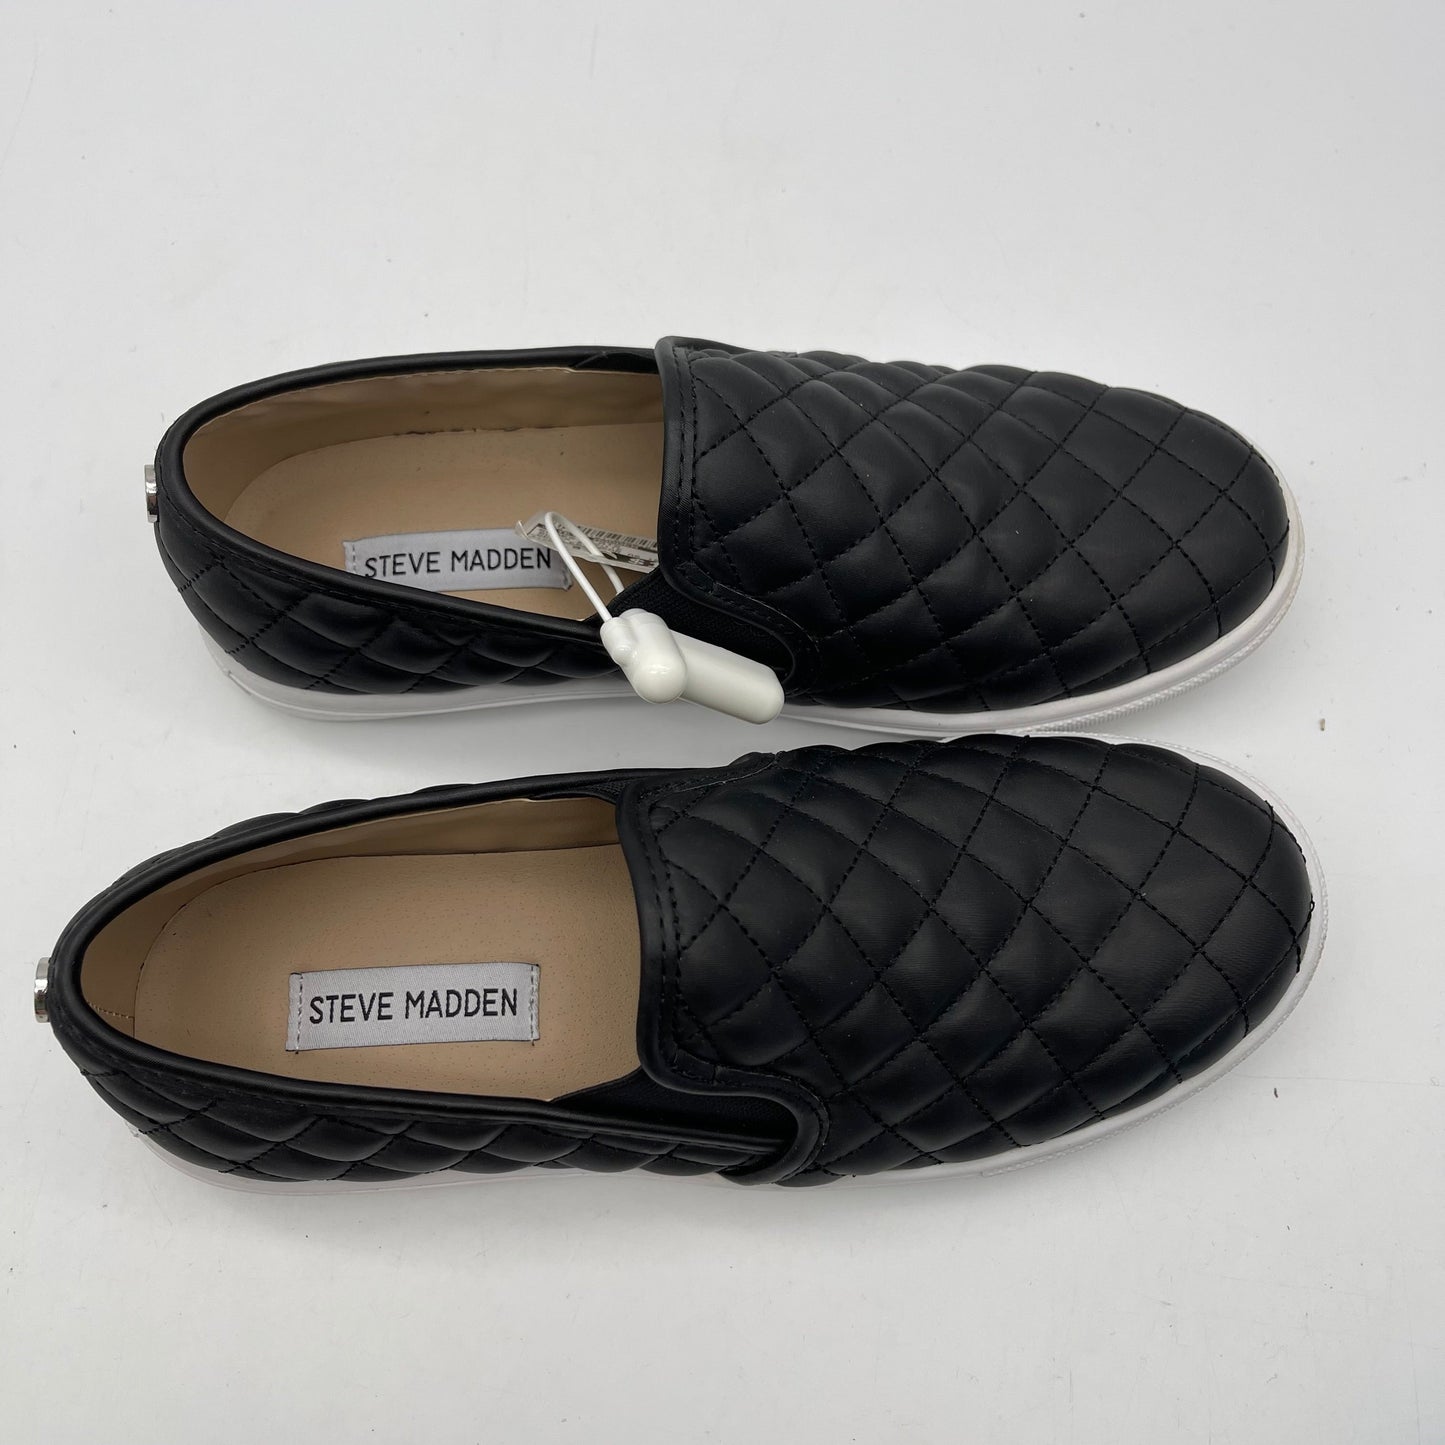 Black & White Shoes Flats Steve Madden, Size 8.5